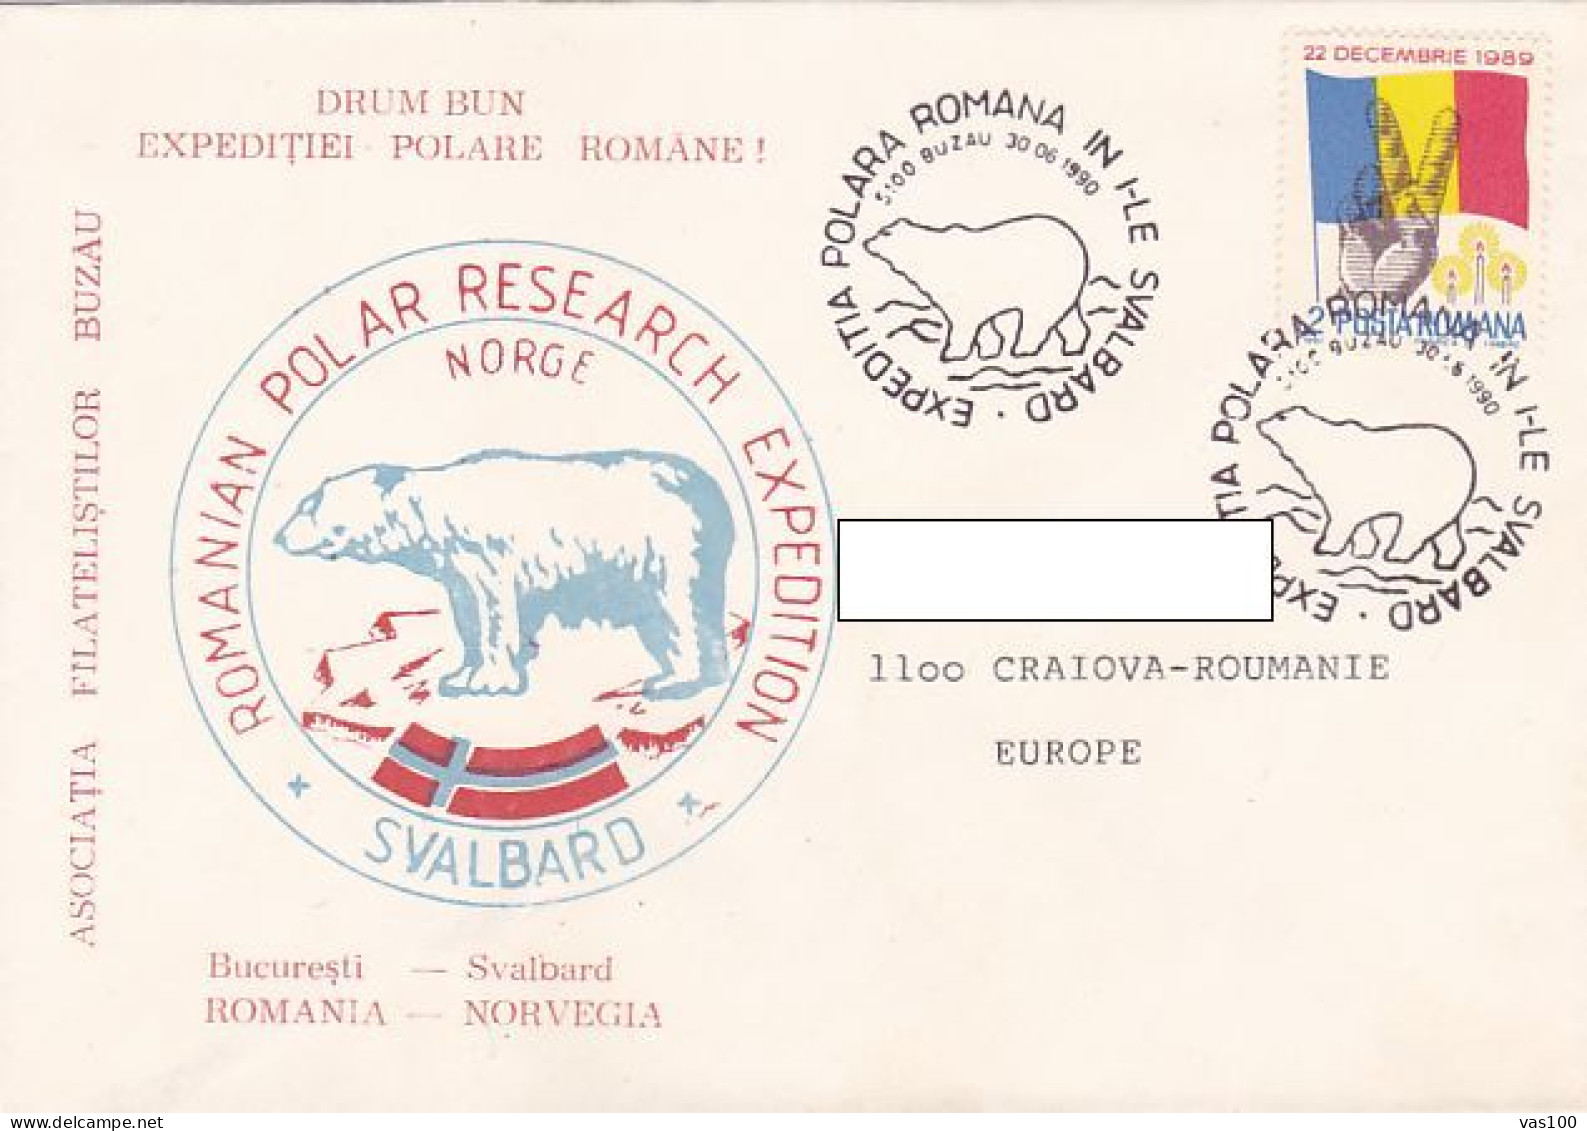 NORTH POLE, ARCTIC EXPEDITION, ROMANIAN EXPEDITION IN SVALBARD, POLAR BEAR, SPECIAL COVER, 1990, ROMANIA - Expediciones árticas